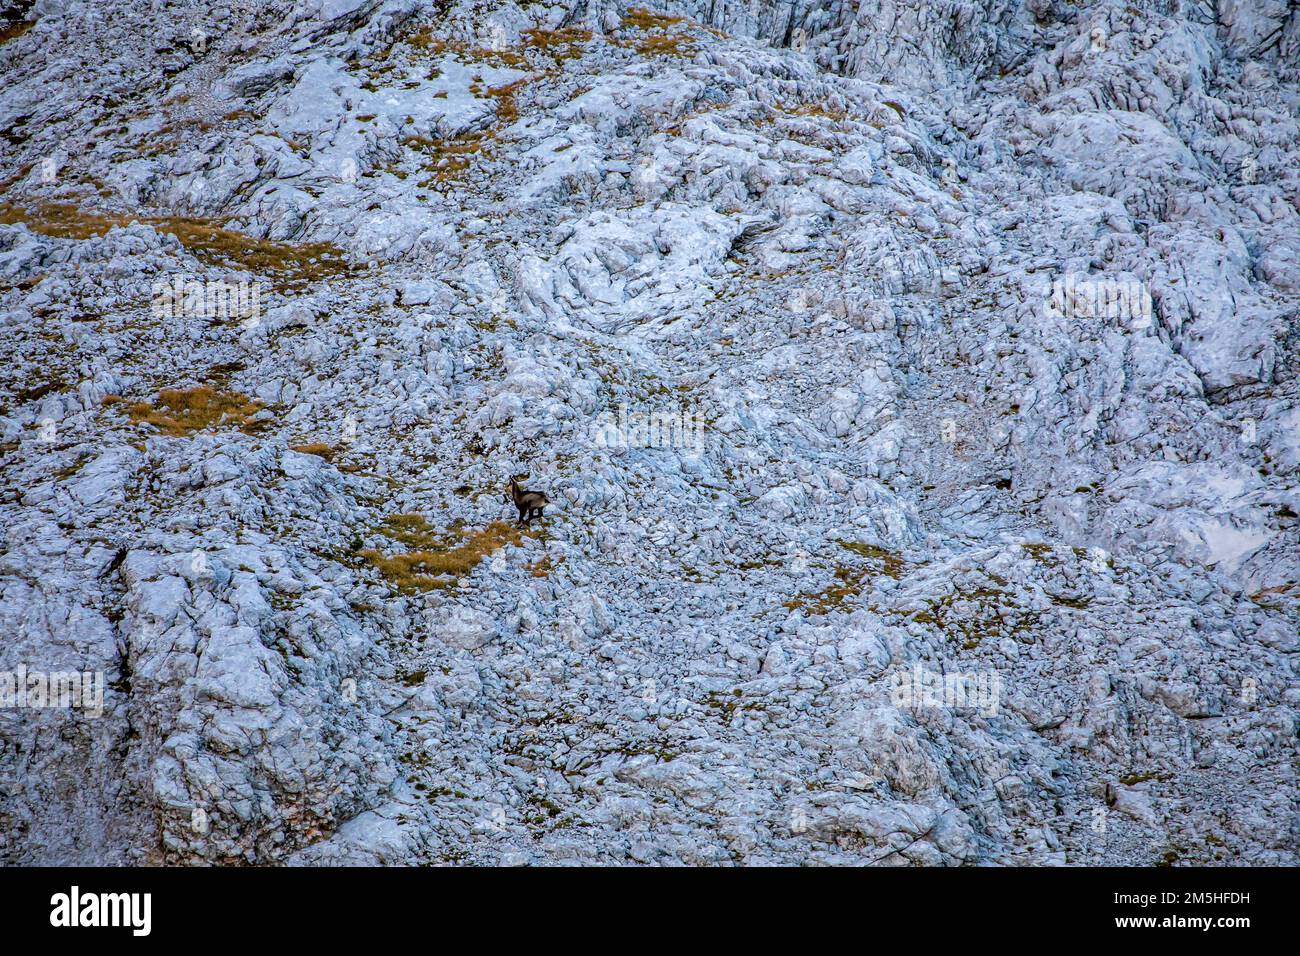 Camosci nelle alpi Giulie, Slovenia Foto Stock